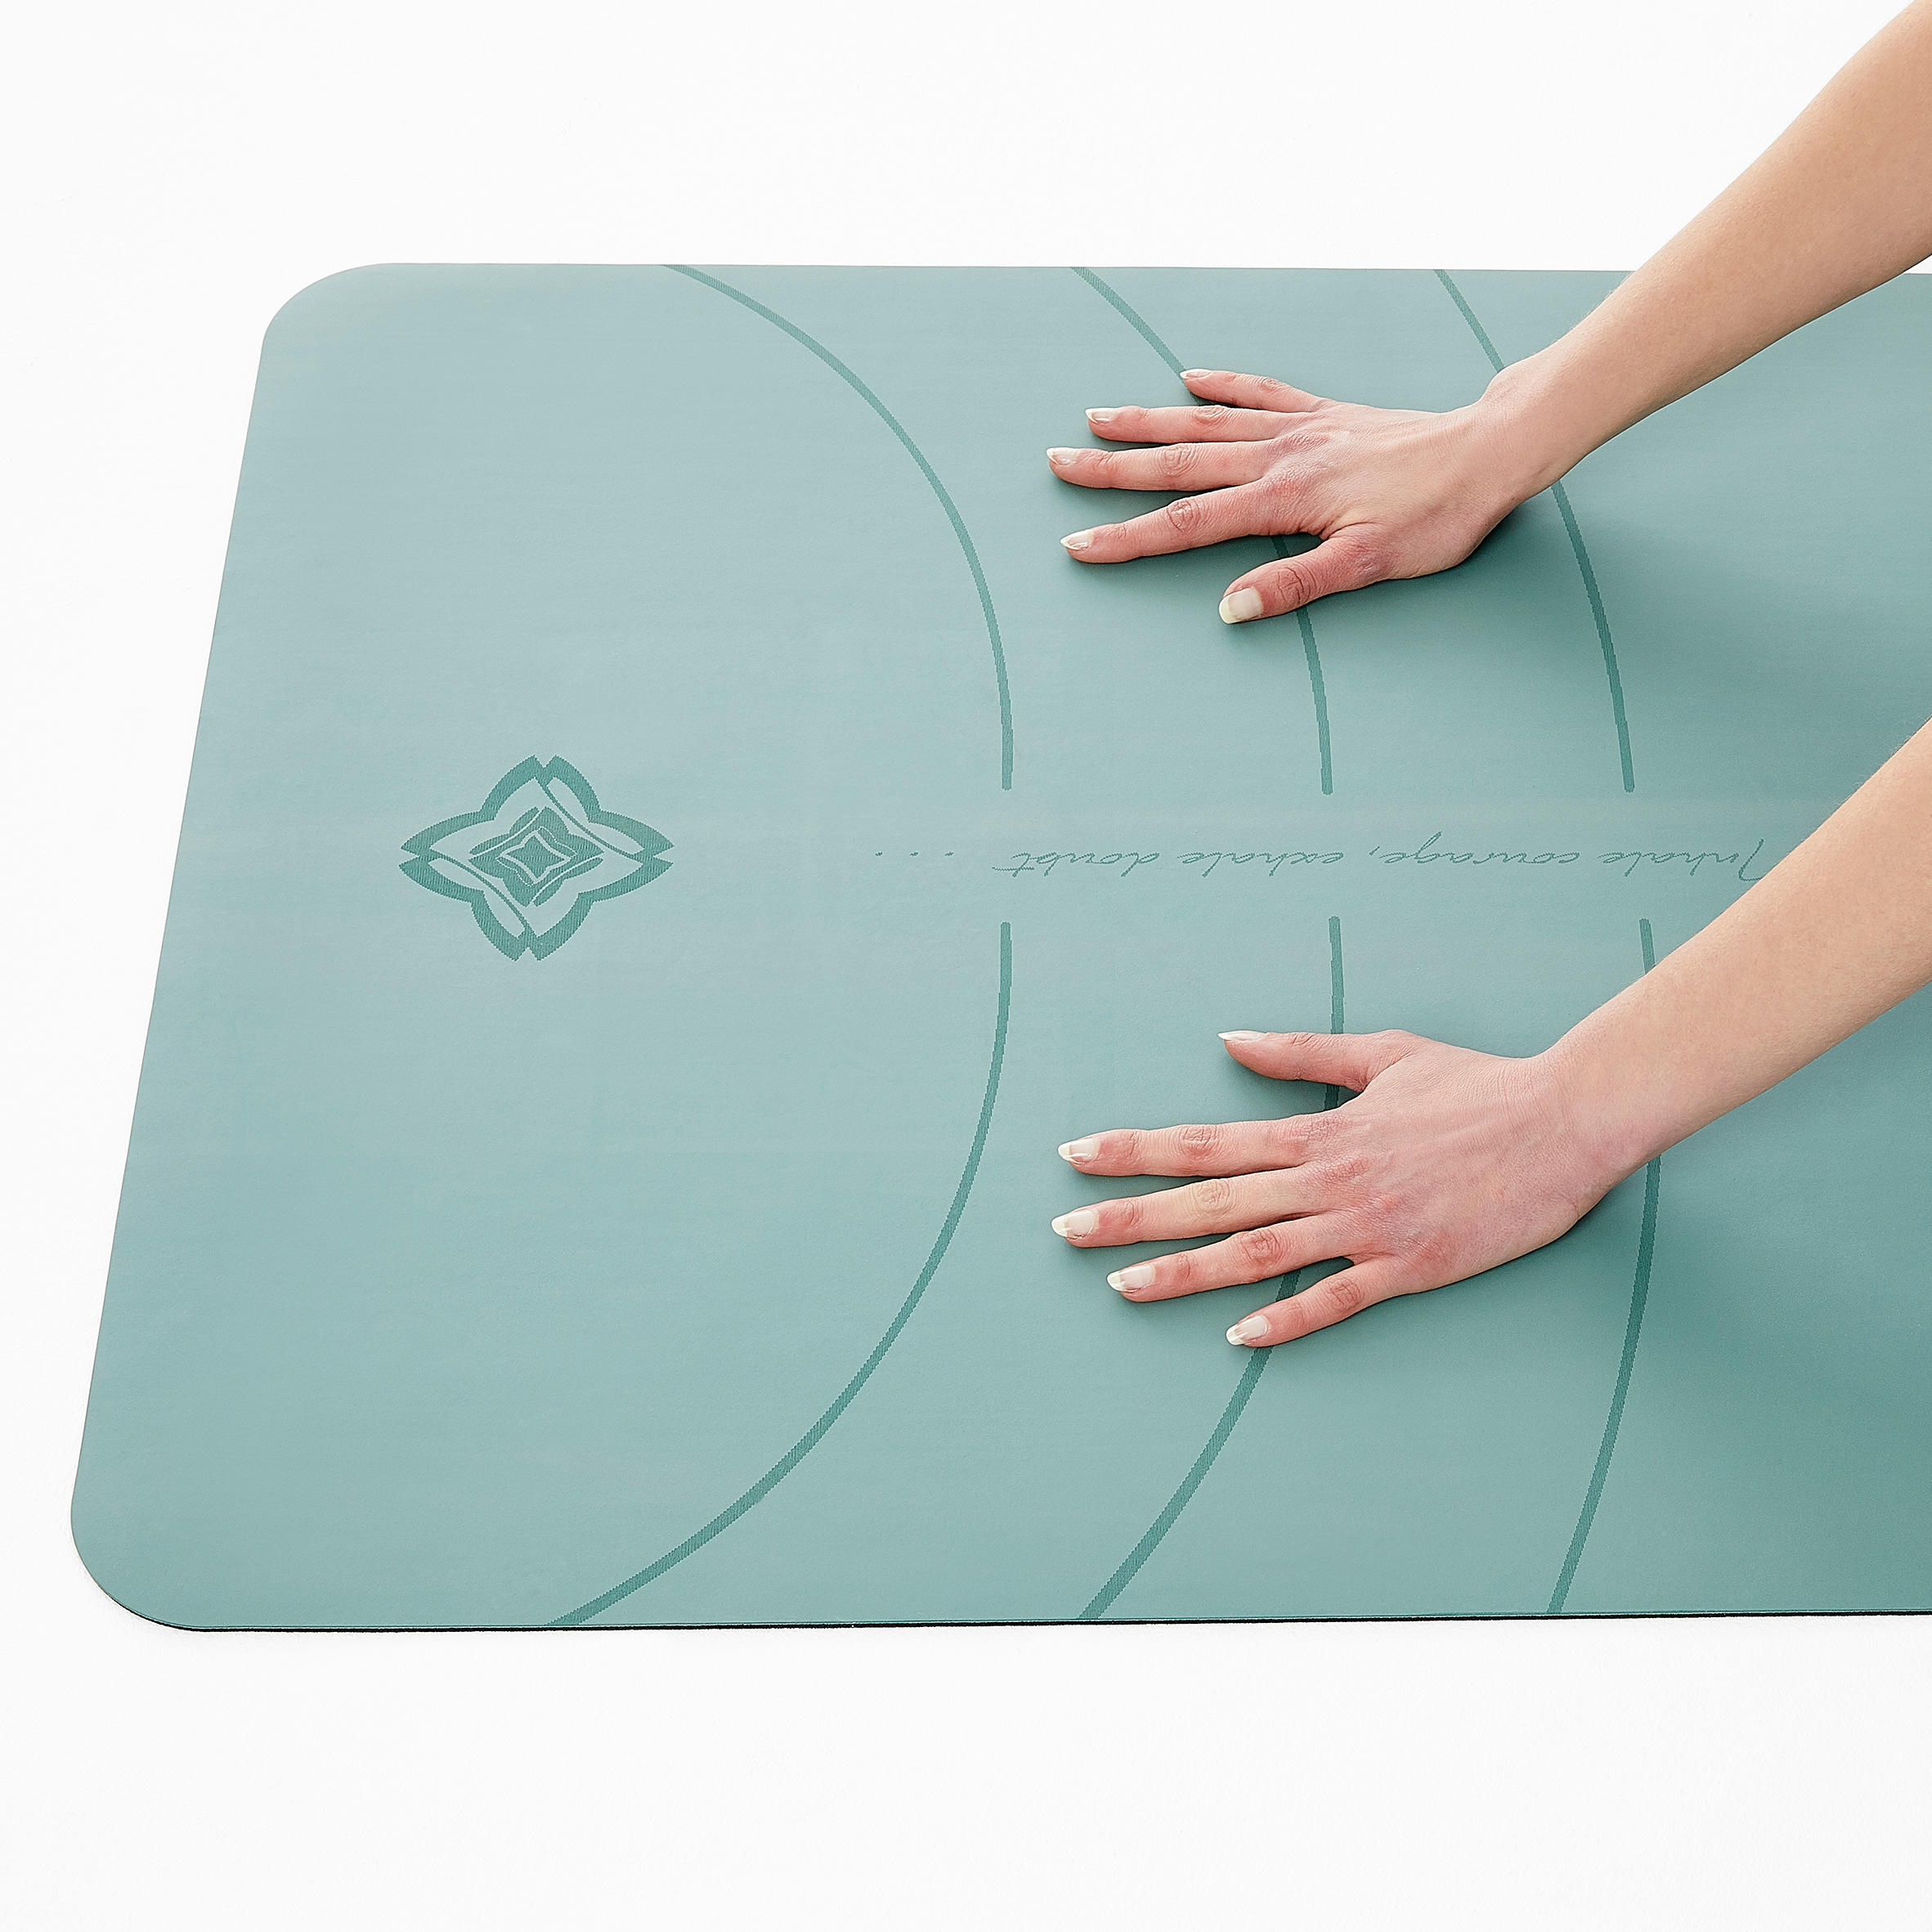 3mm yoga mat